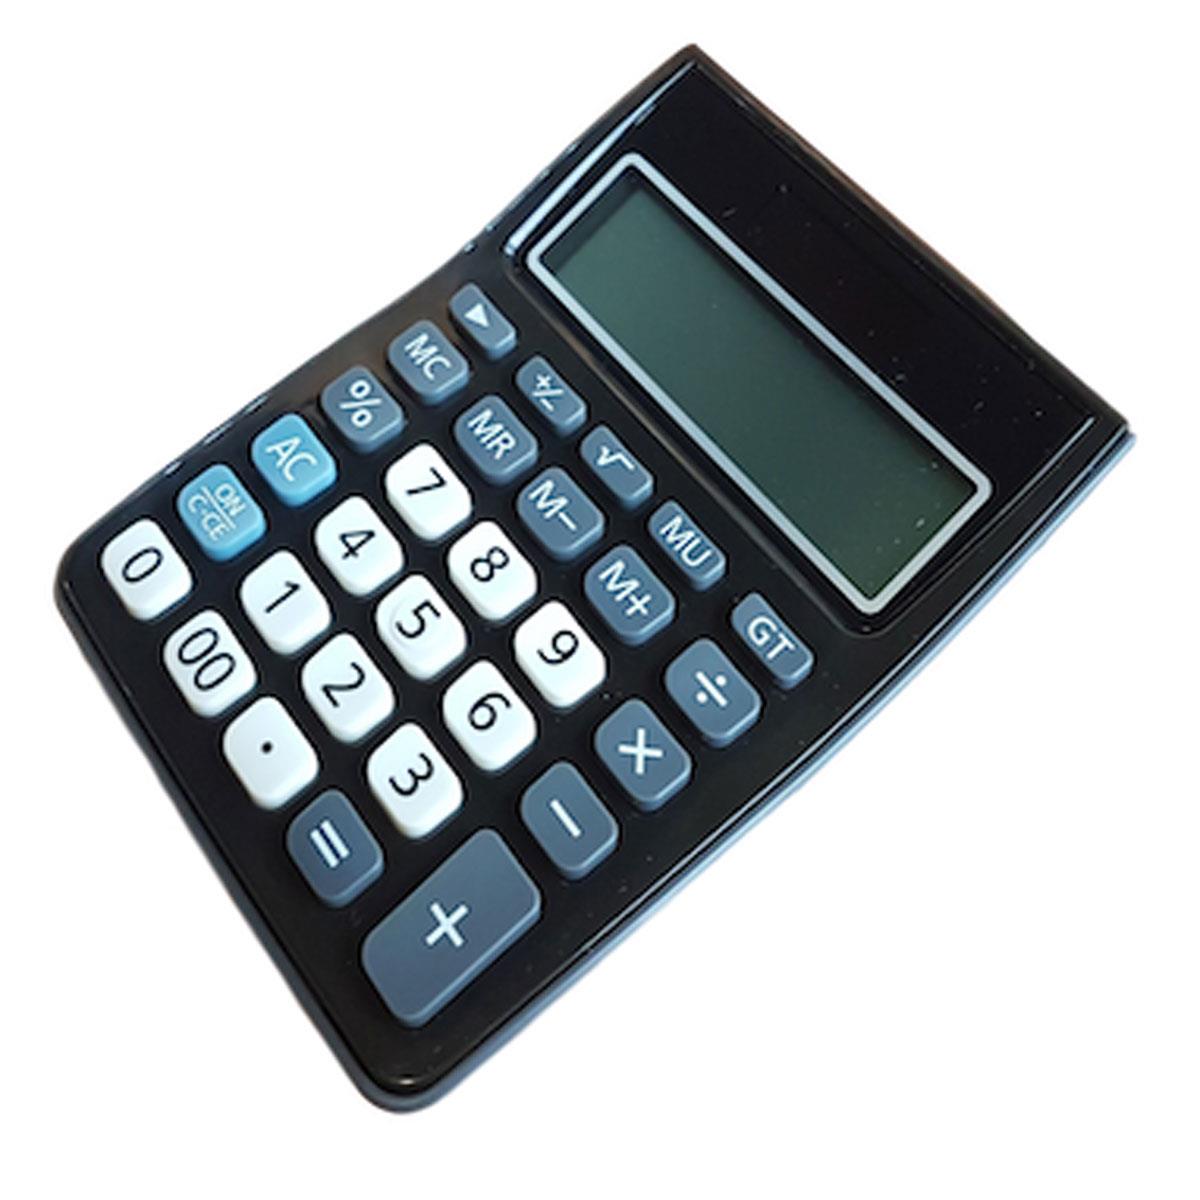 Image of Paraben Black Vox Calculator Hidden USB Audio Voice Recorder